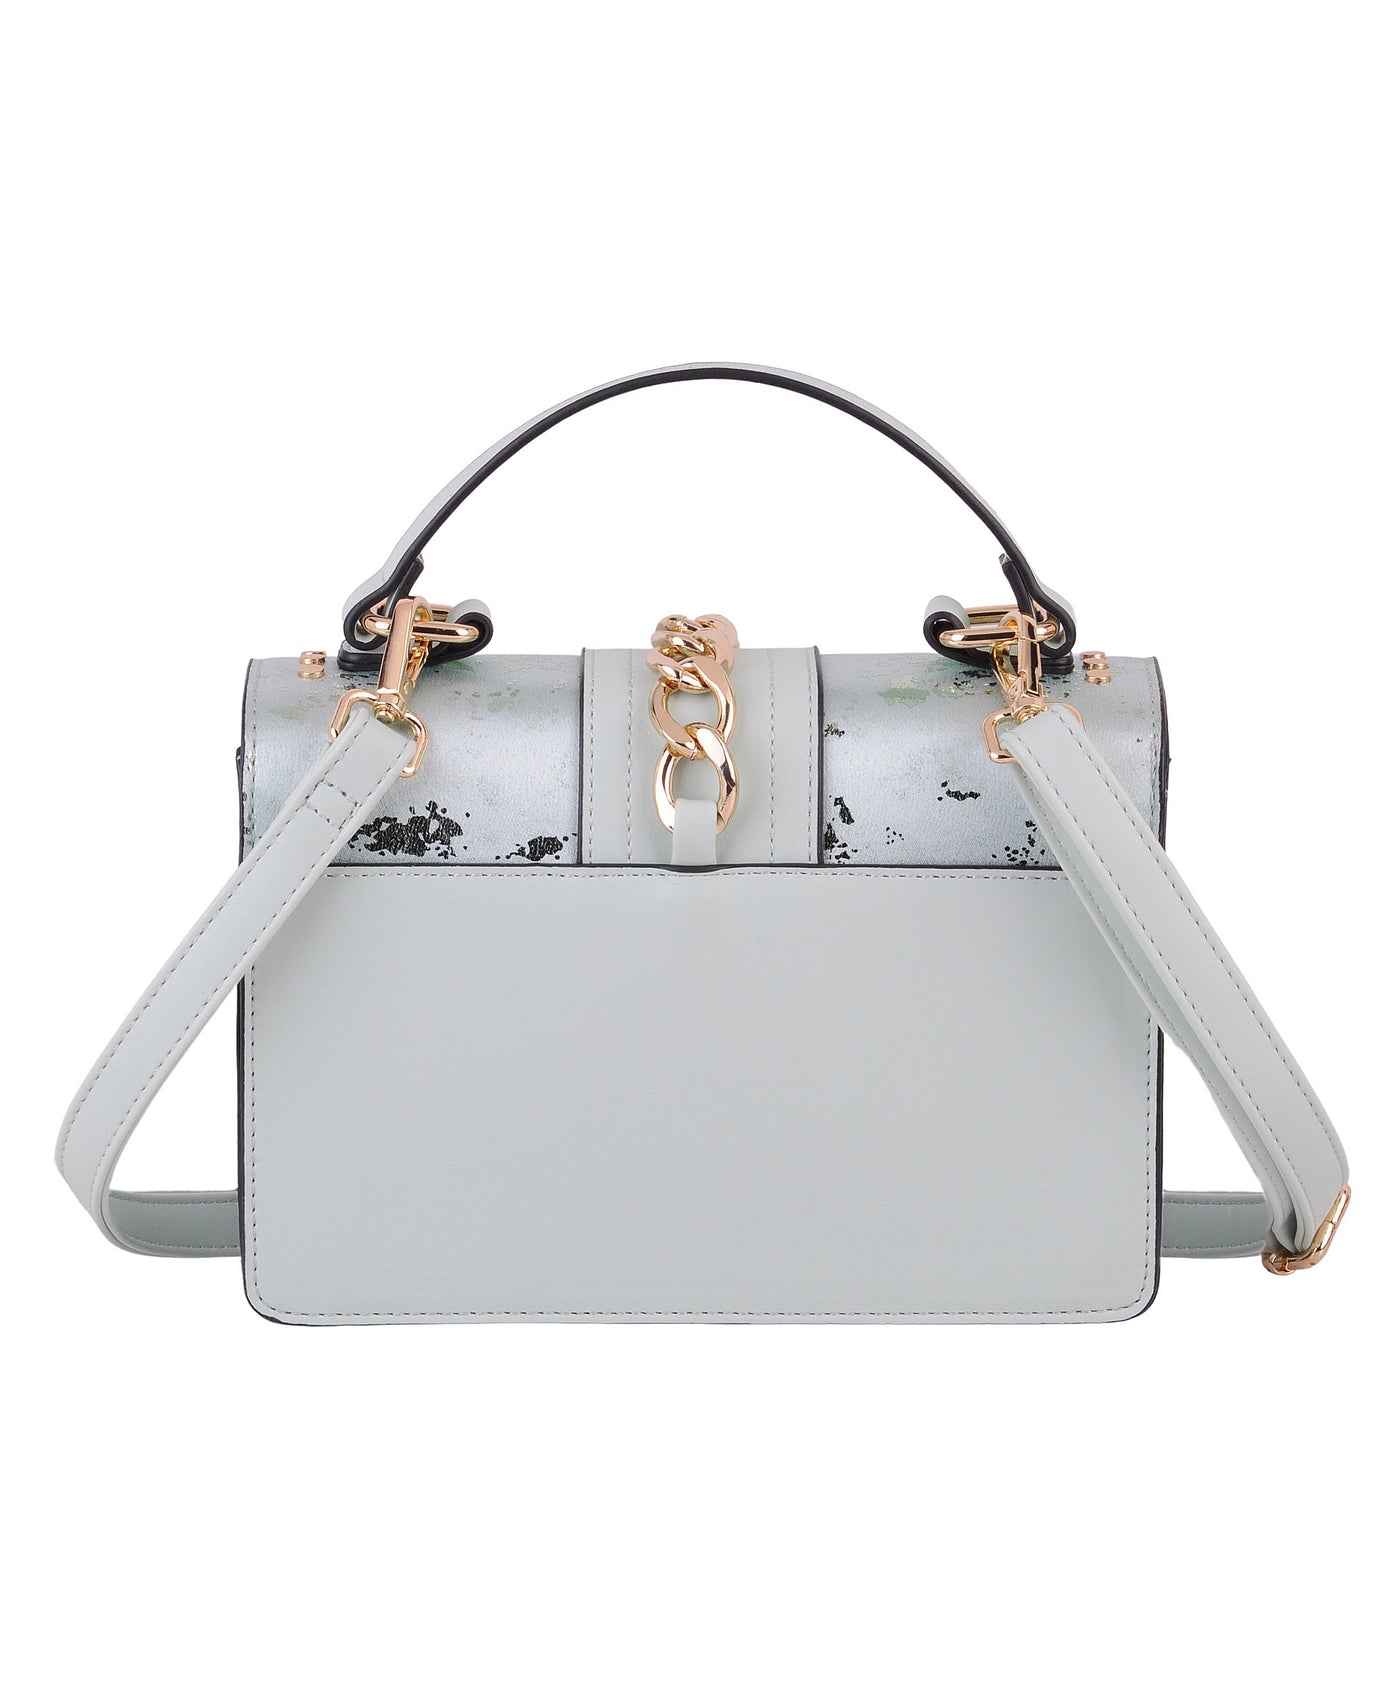 Metallic Handbag w/ Studs & Chain Accents image 3